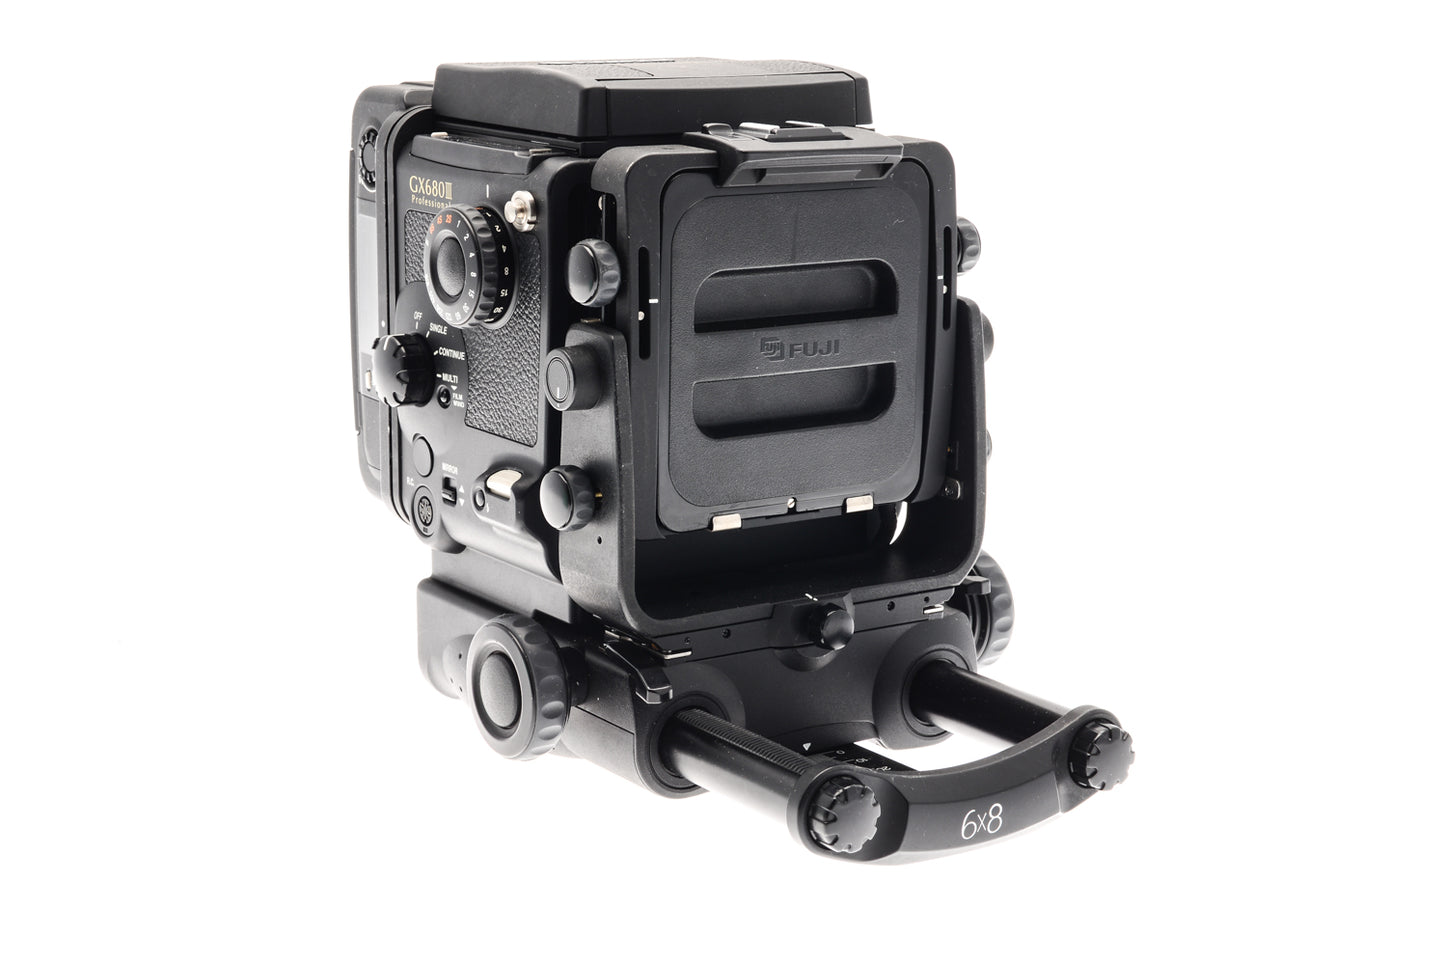 Fuji GX680 III - Camera